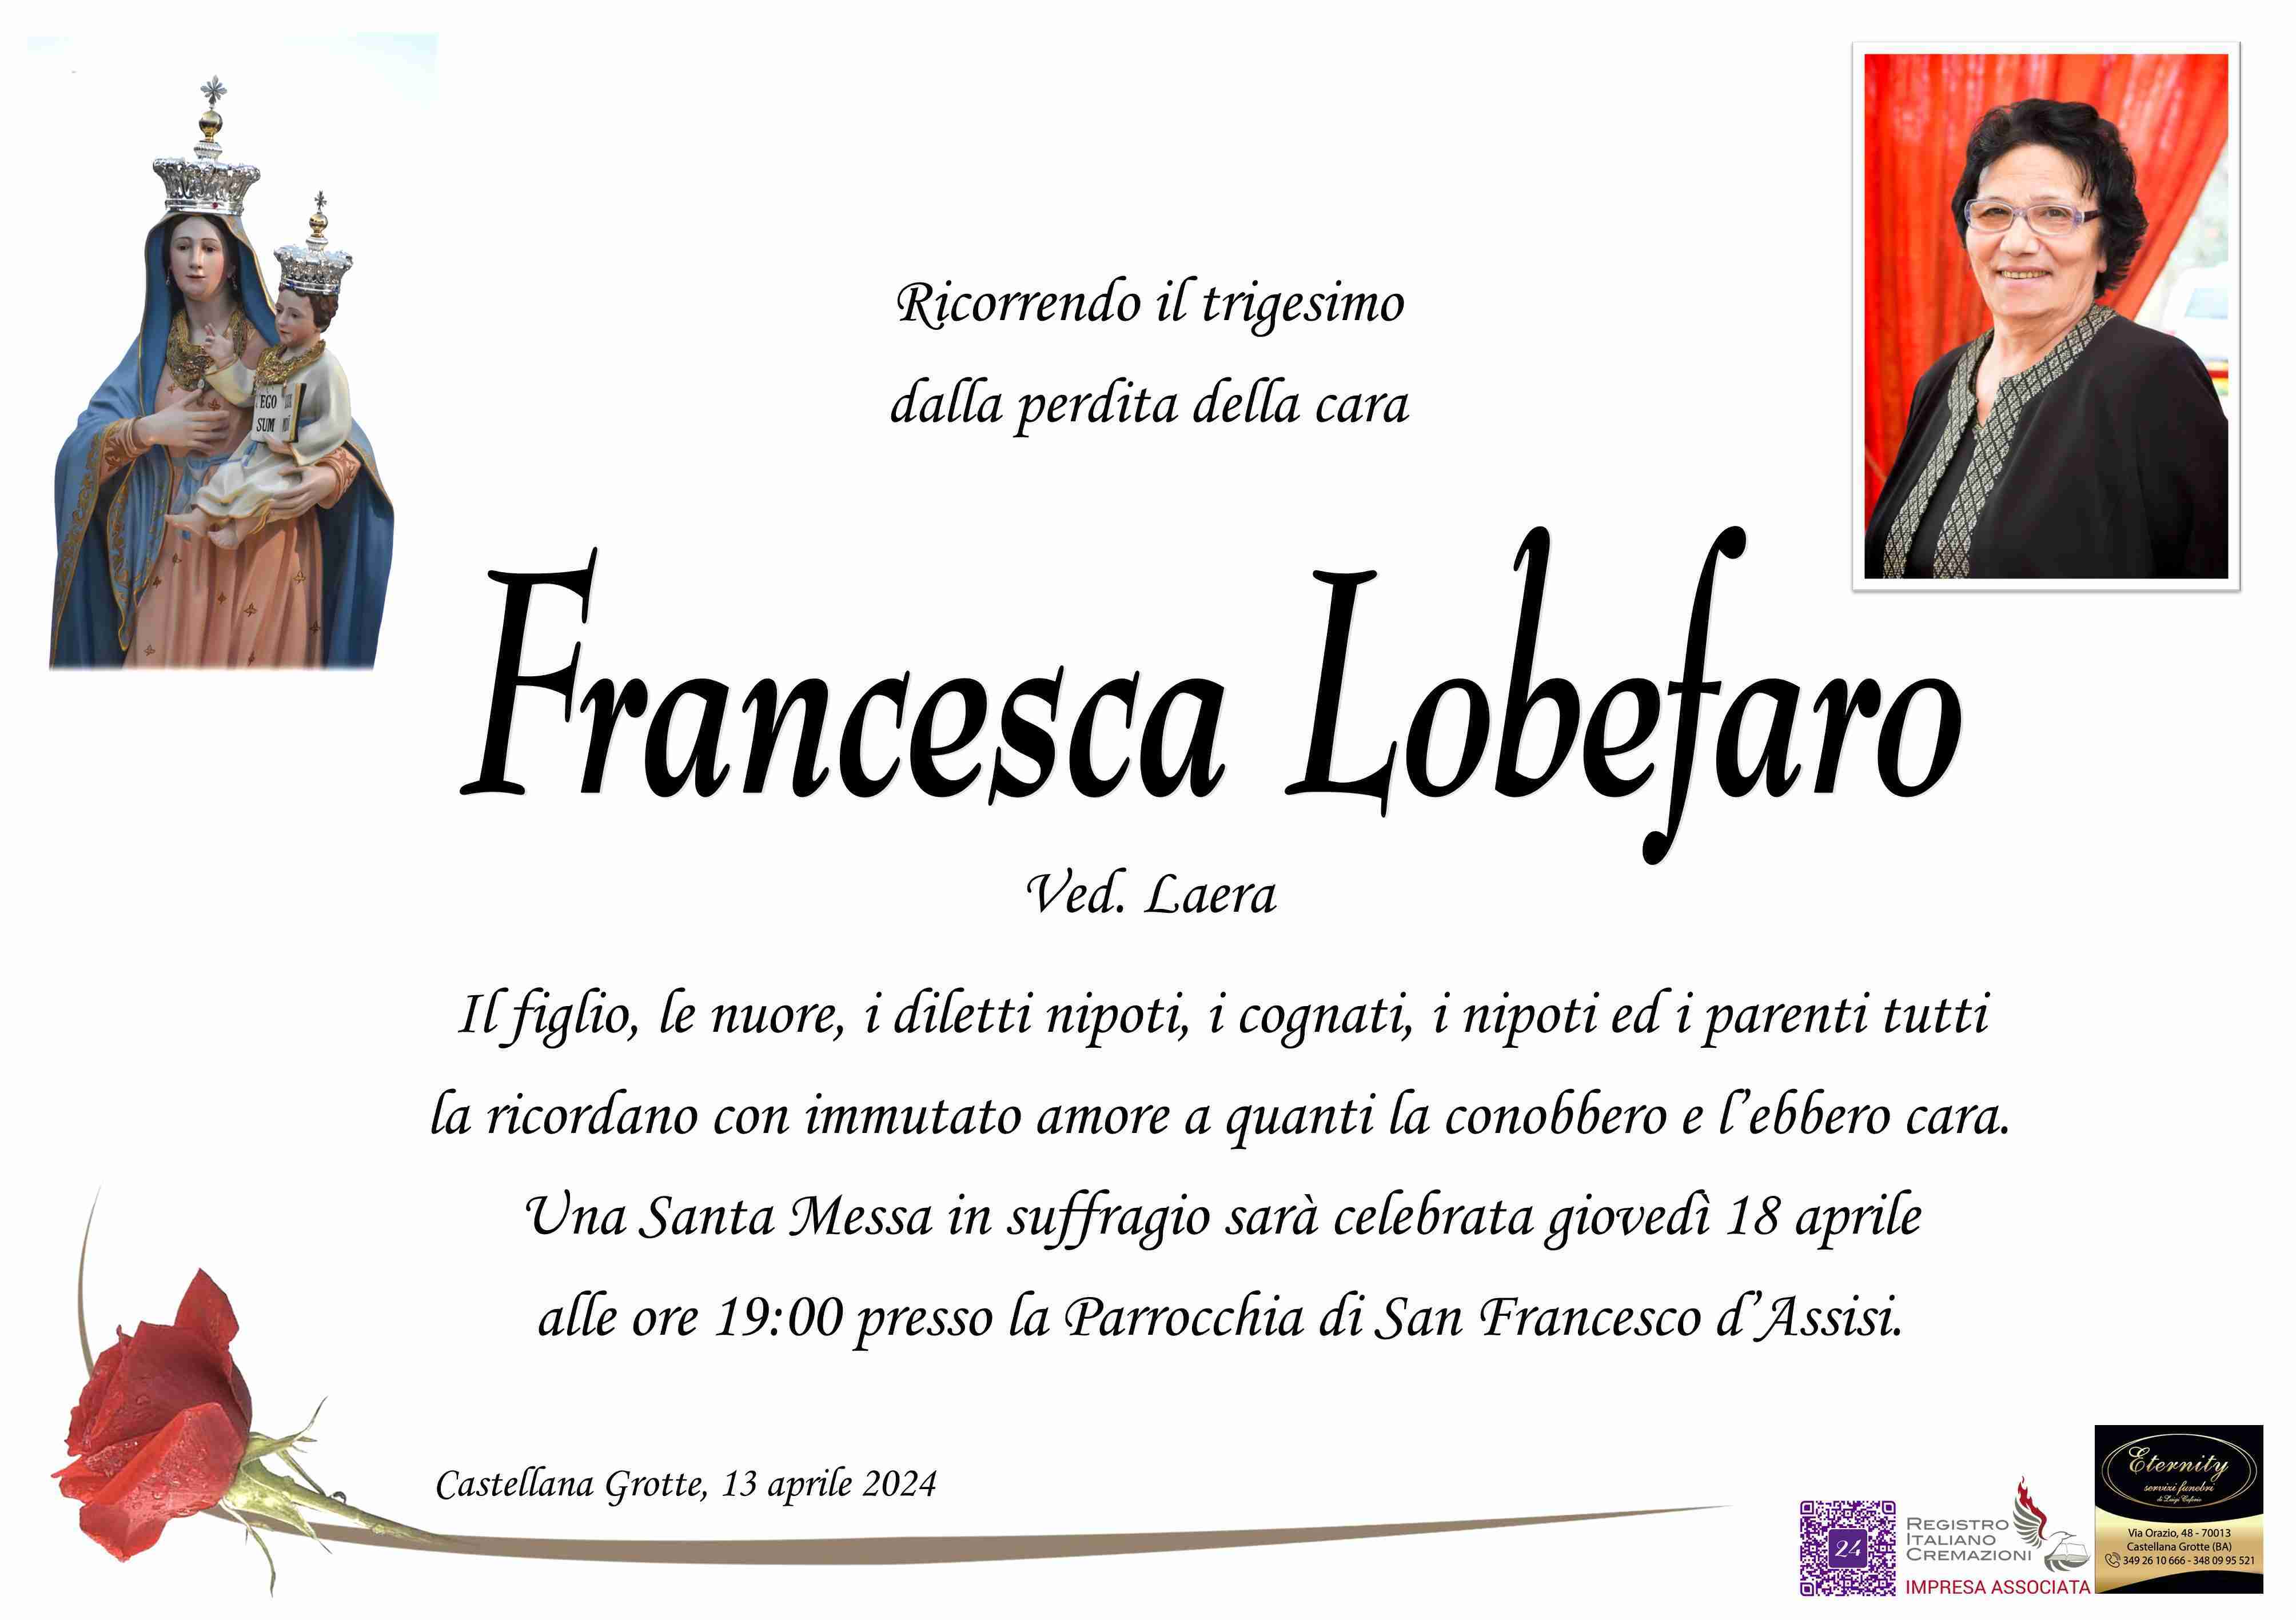 Francesca Lobefaro